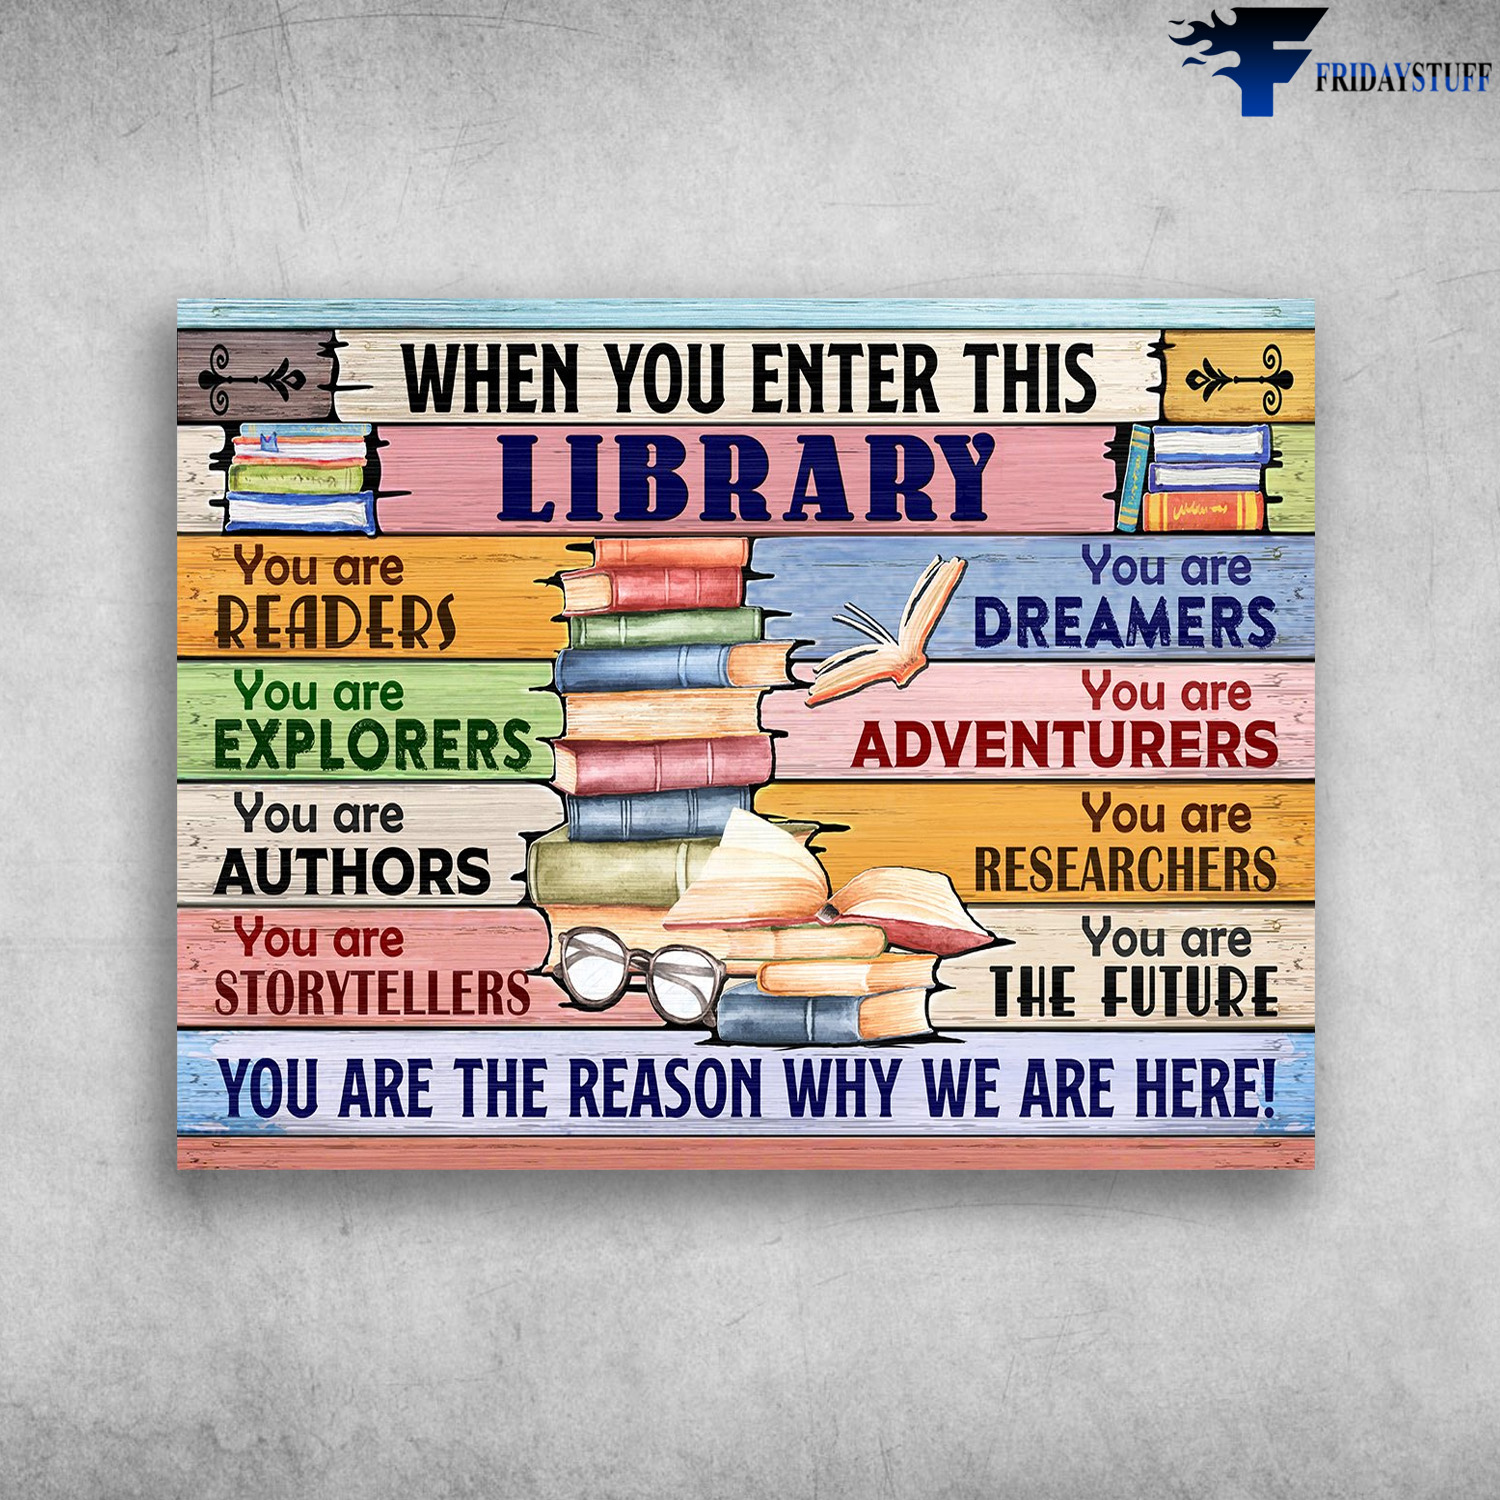 Book Lover, Library Poster - When You Enten This Library, You Are Readers, You Are Explorers, You Are Authors, You Are Storytellers, You Are Dreamers, You Are Adventurers, You Are Researchers, You Are The Future